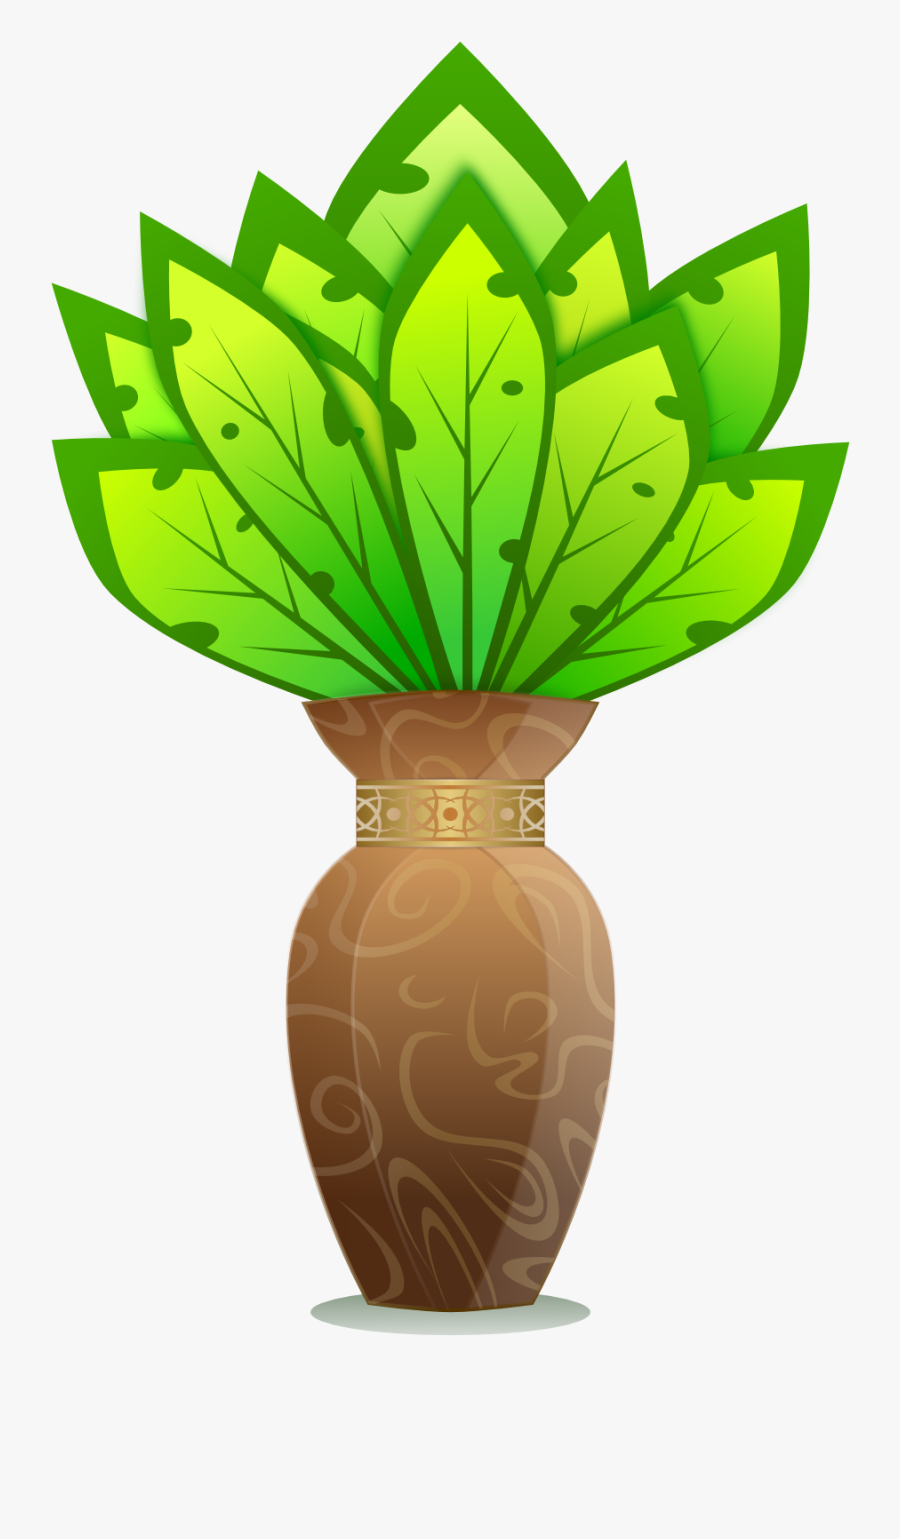 Plant Images Free Download Clip Art On - Plant In Vase Clipart, Transparent Clipart